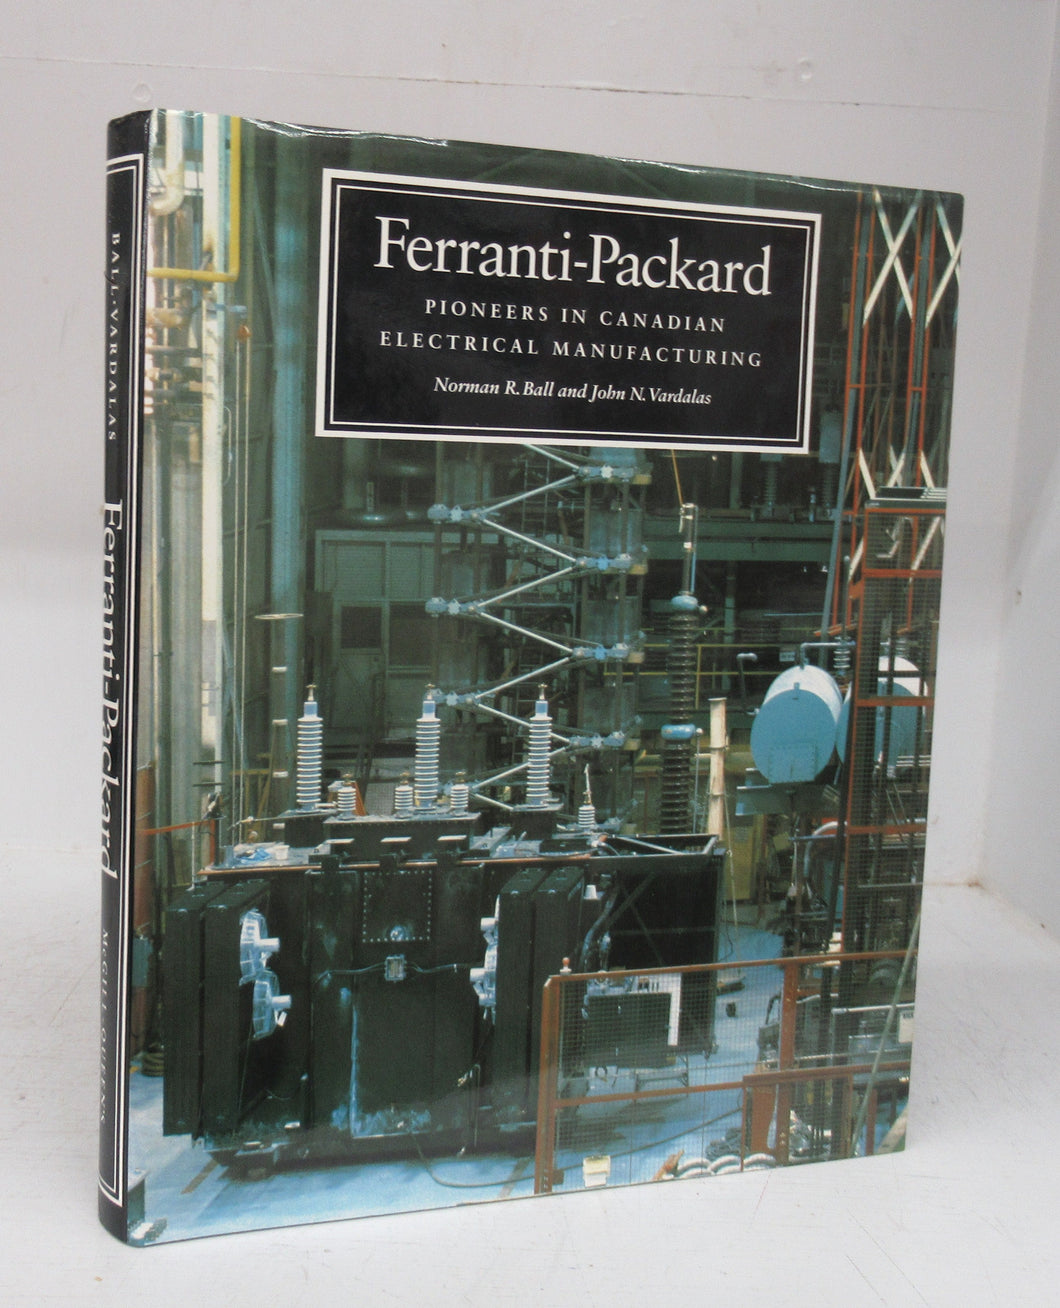 Ferranti-Packard: Pioneers in Canadian Electrical Manufacturing